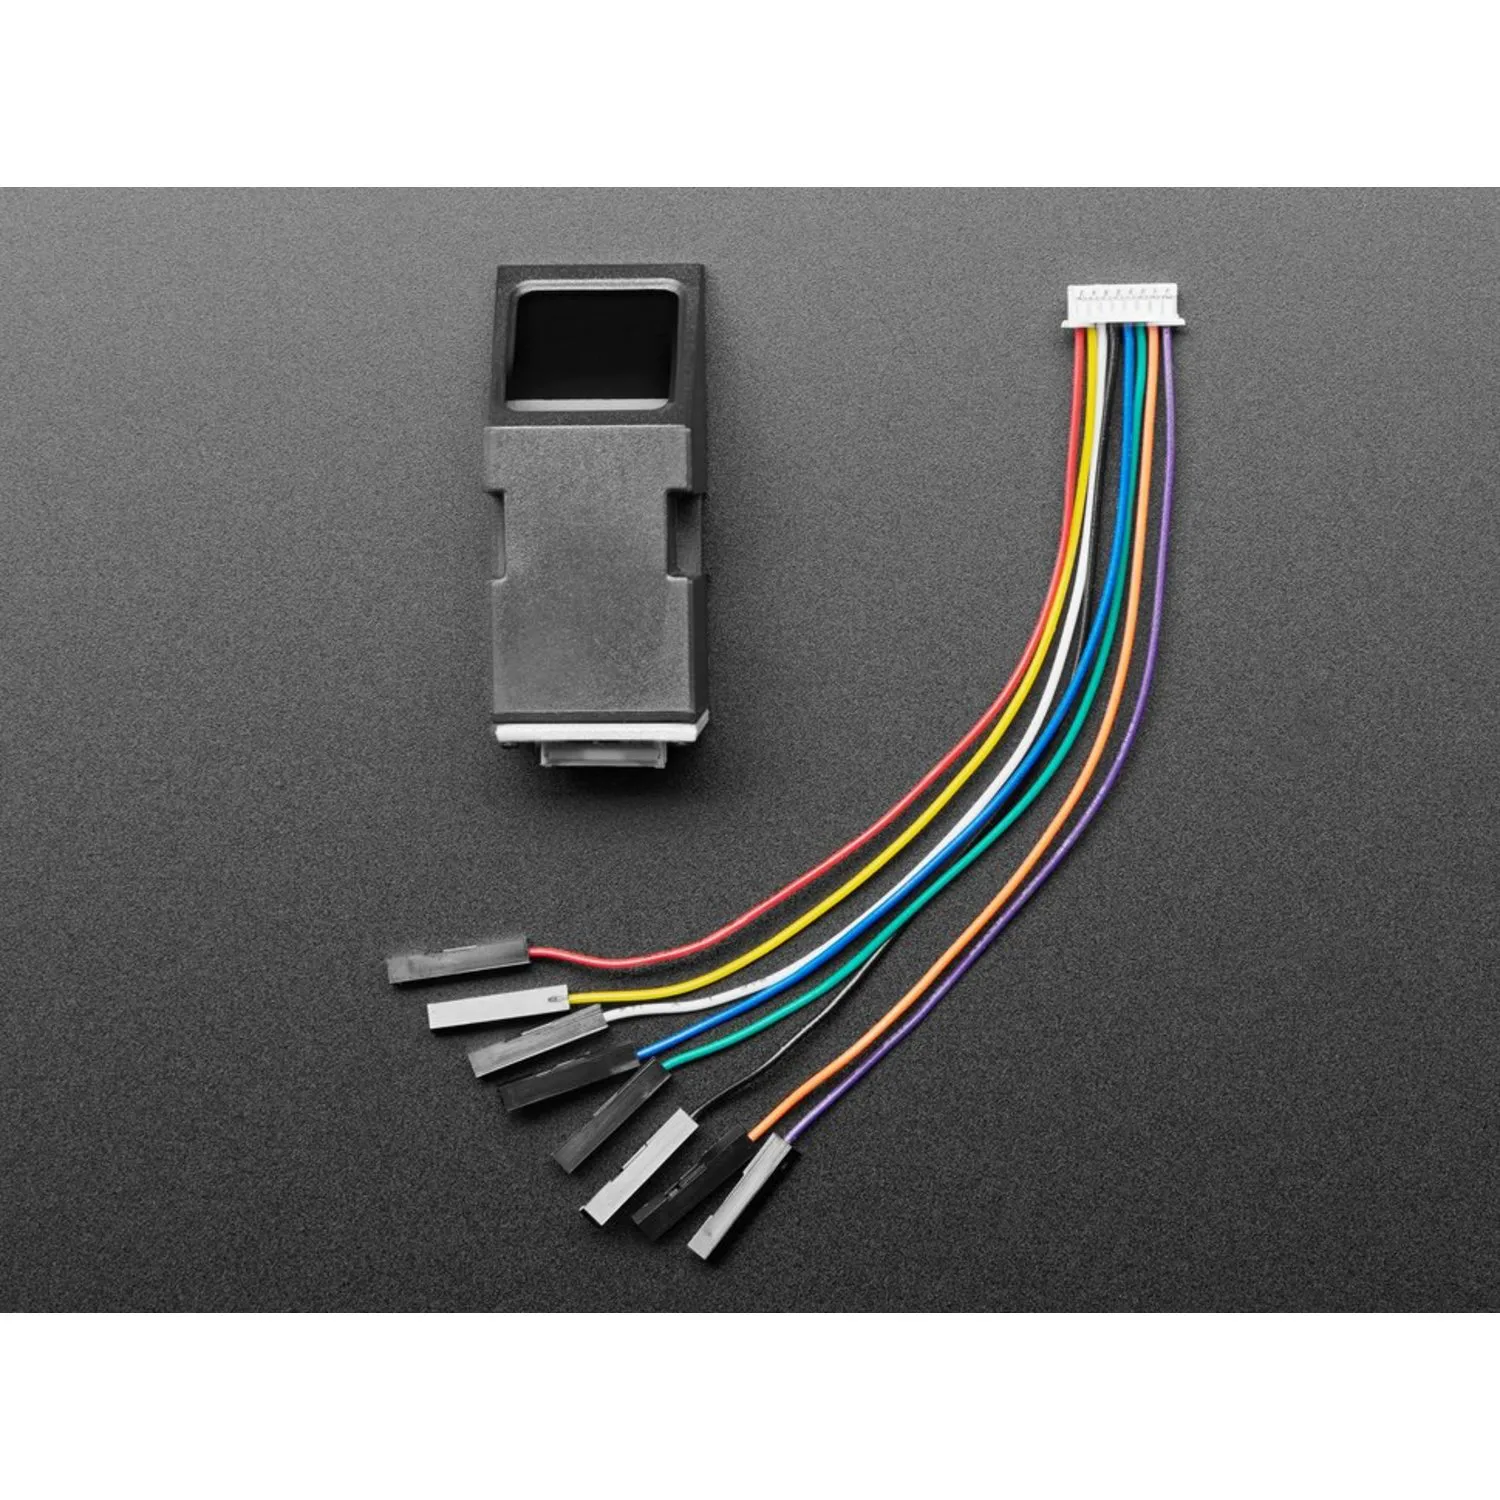 Photo of Basic Fingerprint Sensor With Socket Header Cable